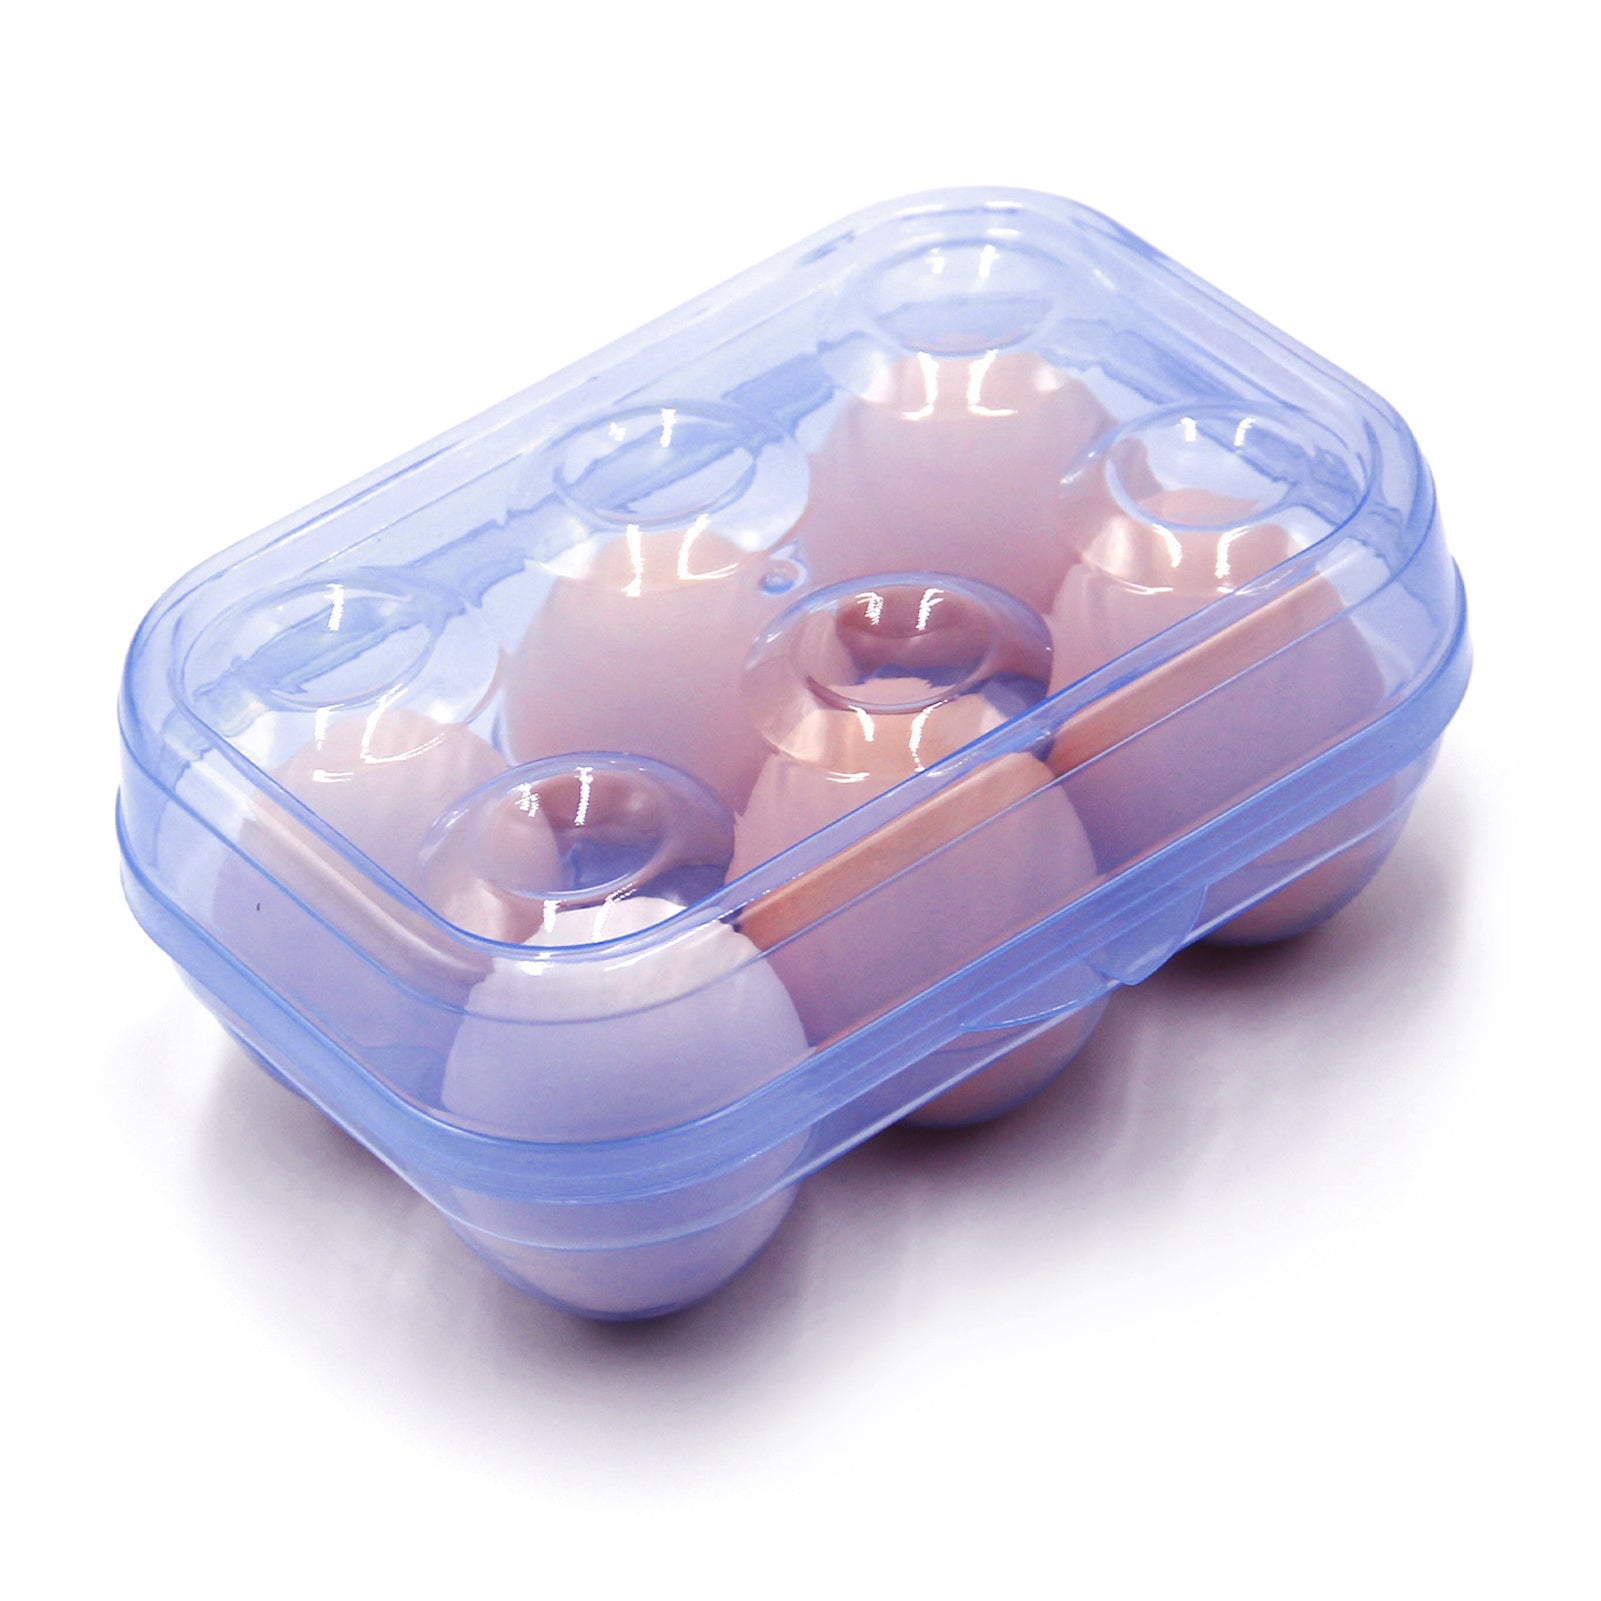 Plastic 15-grid Egg Holder, Transparent Single-layer Egg Storage Container,  Refrigerator Storage Box With Crash-proof Design, Portable Egg Carrier